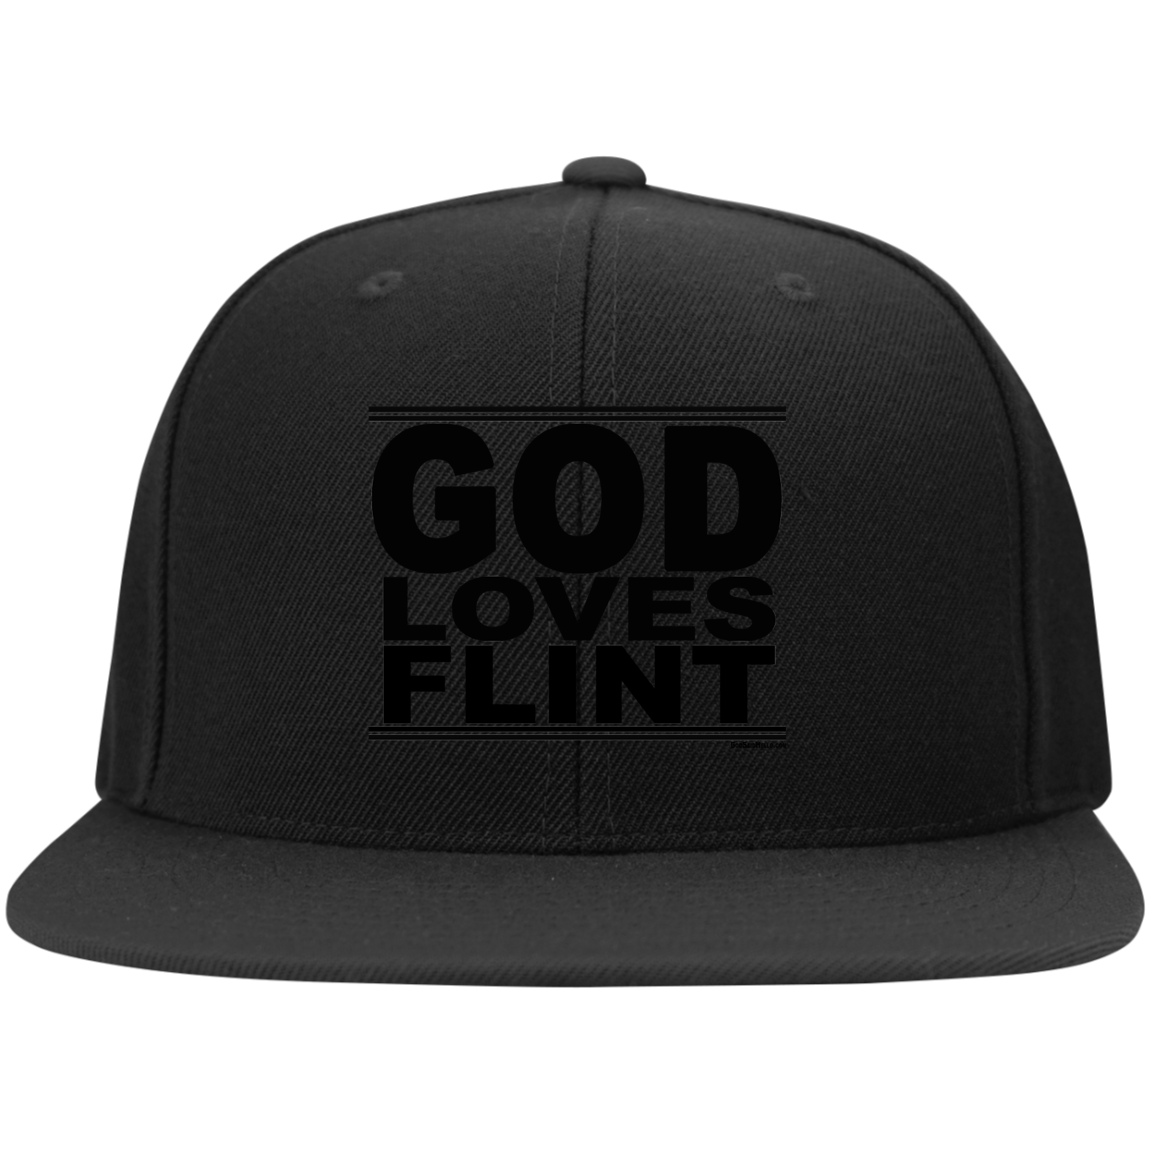 #GodLovesFlint - Snapback Hat